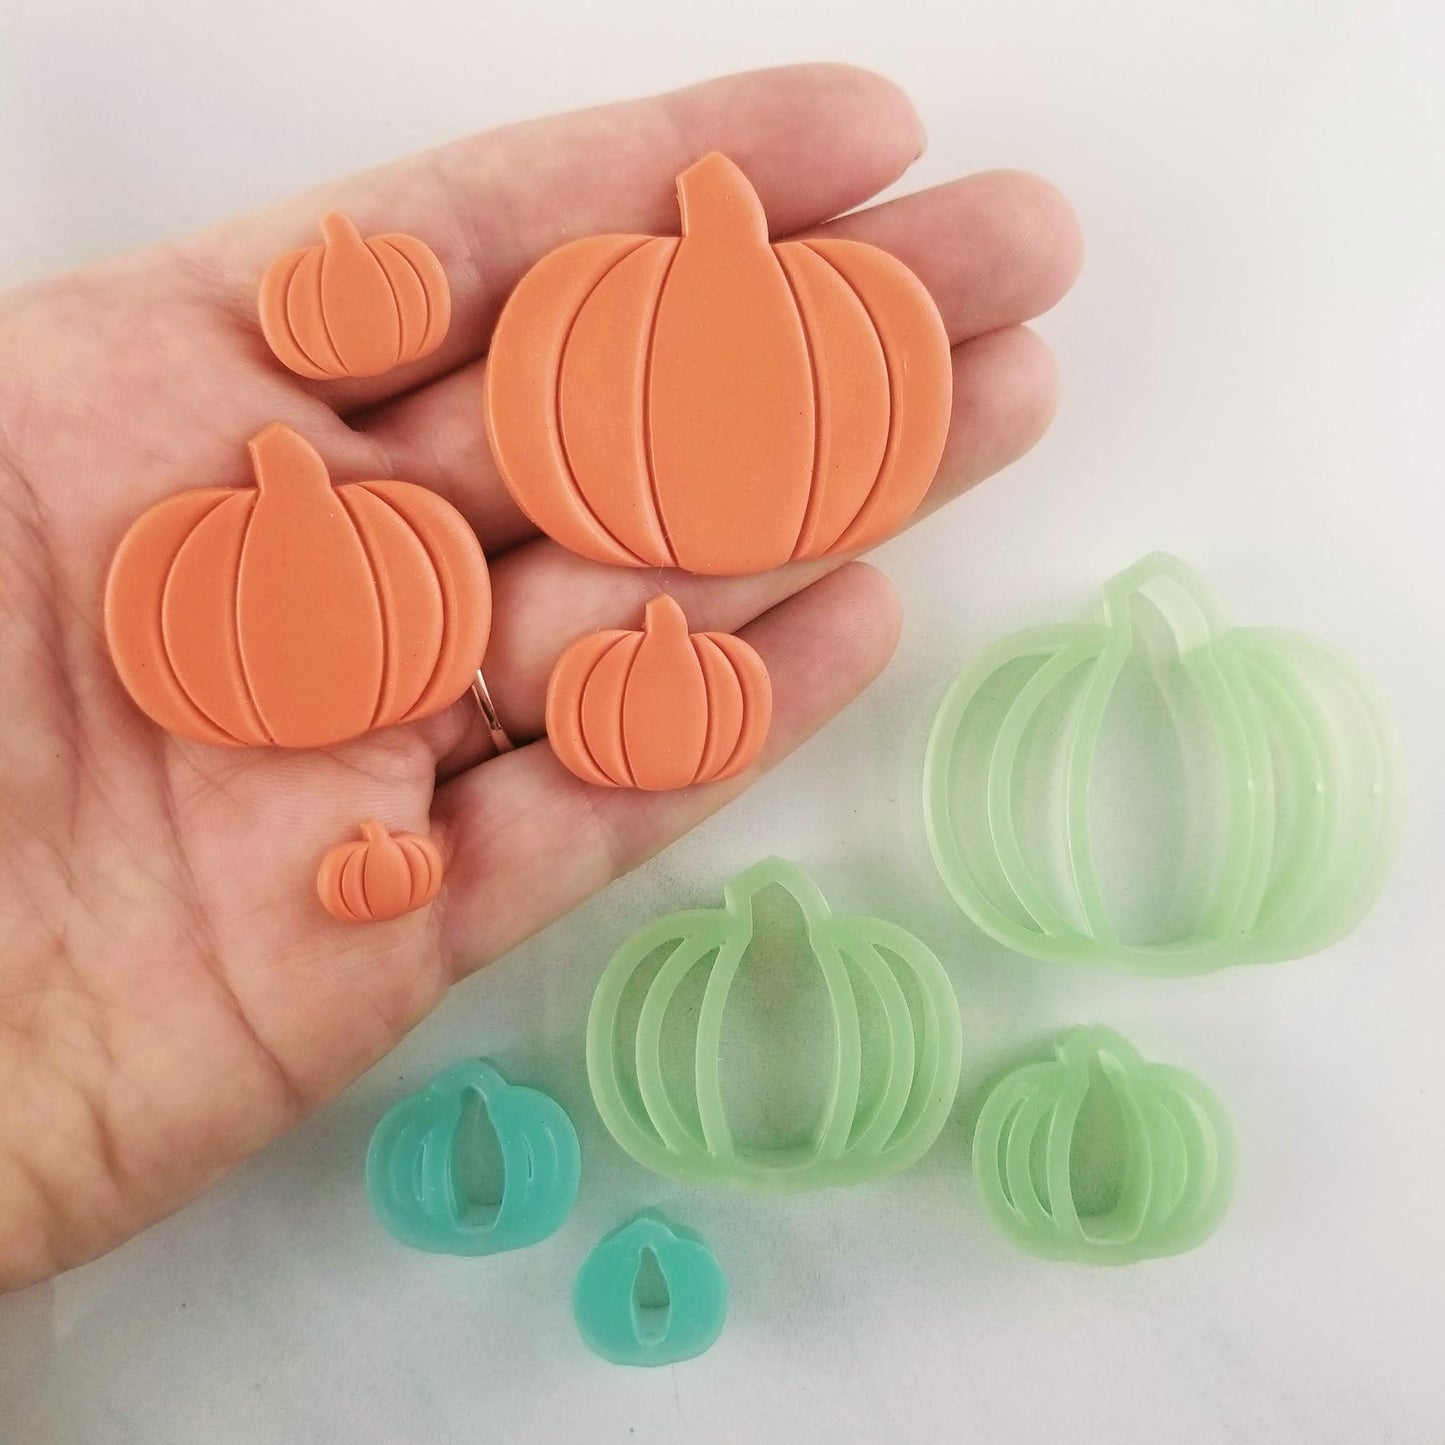 debossed pumpkin shape and design on orange polymer clay